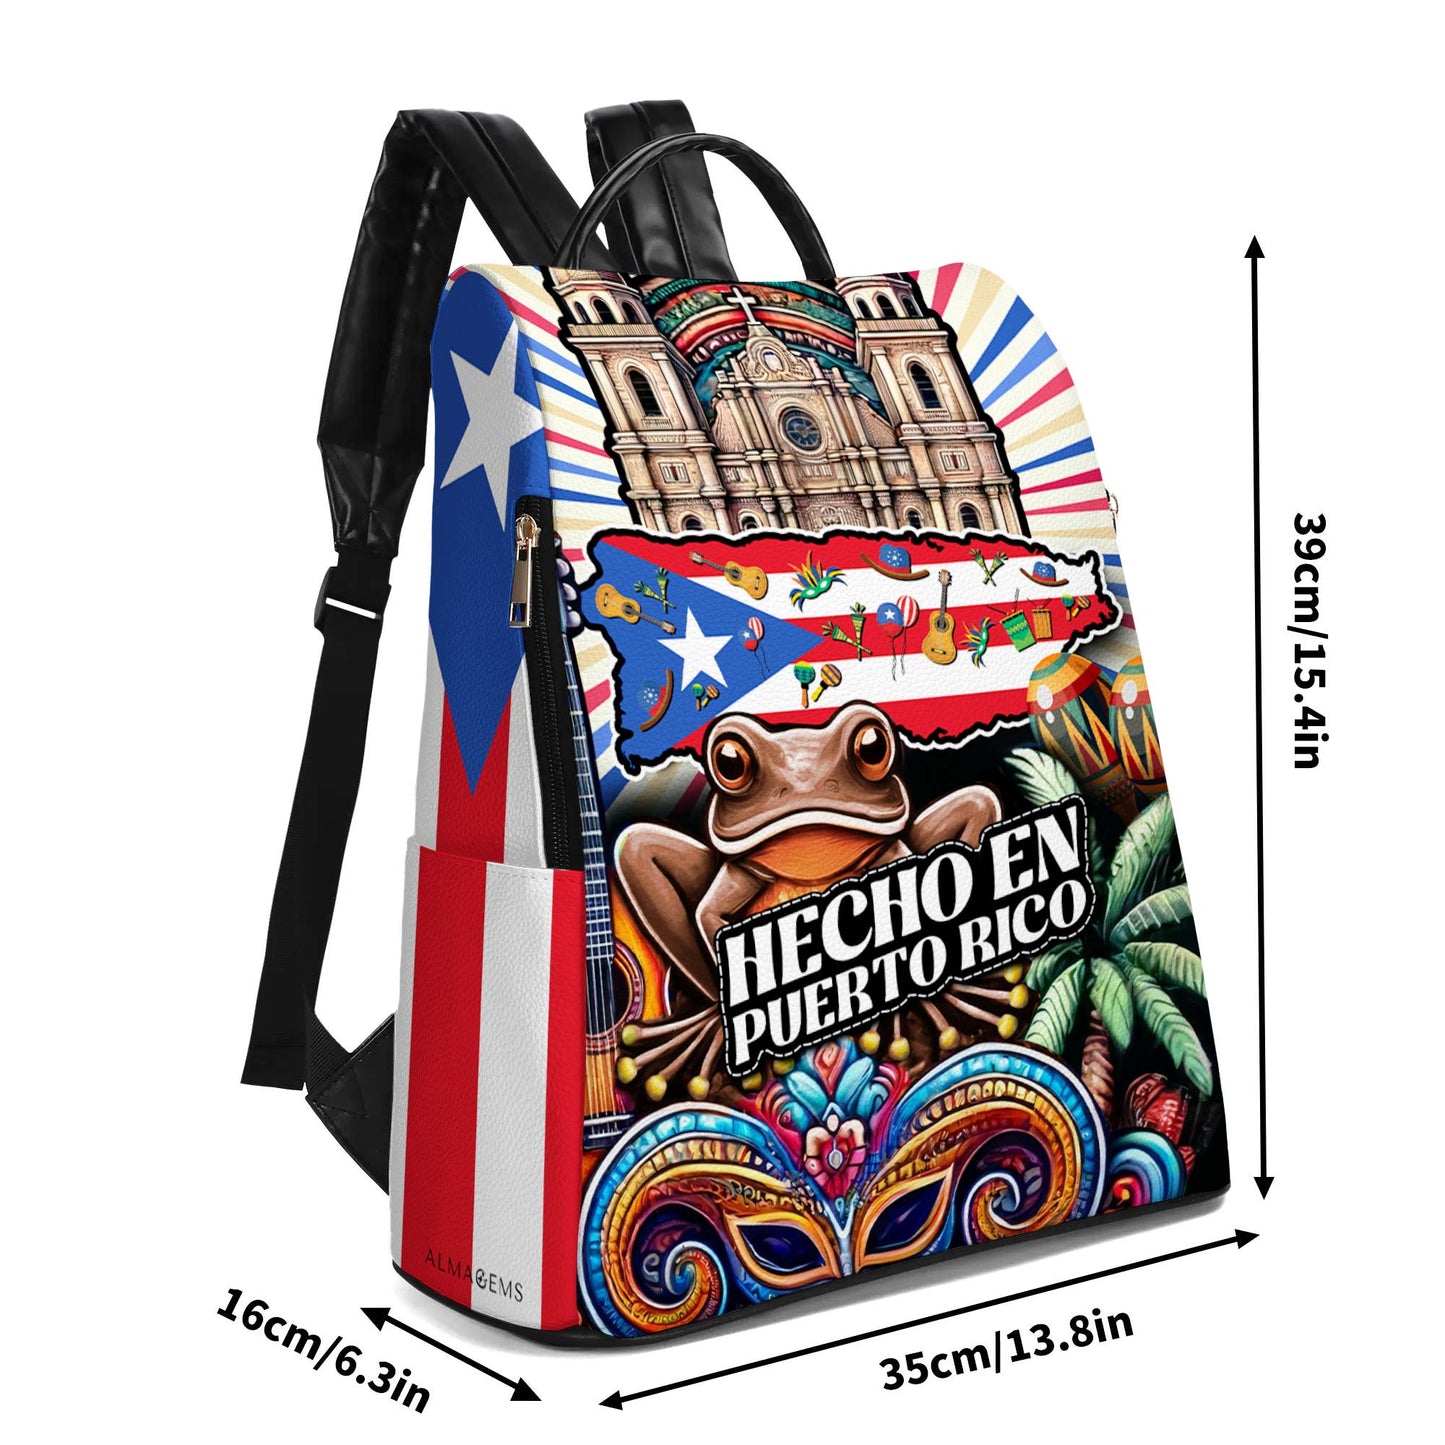 Hecho En Puerto Rico - Personalized Leather BackPack - LA006_BP